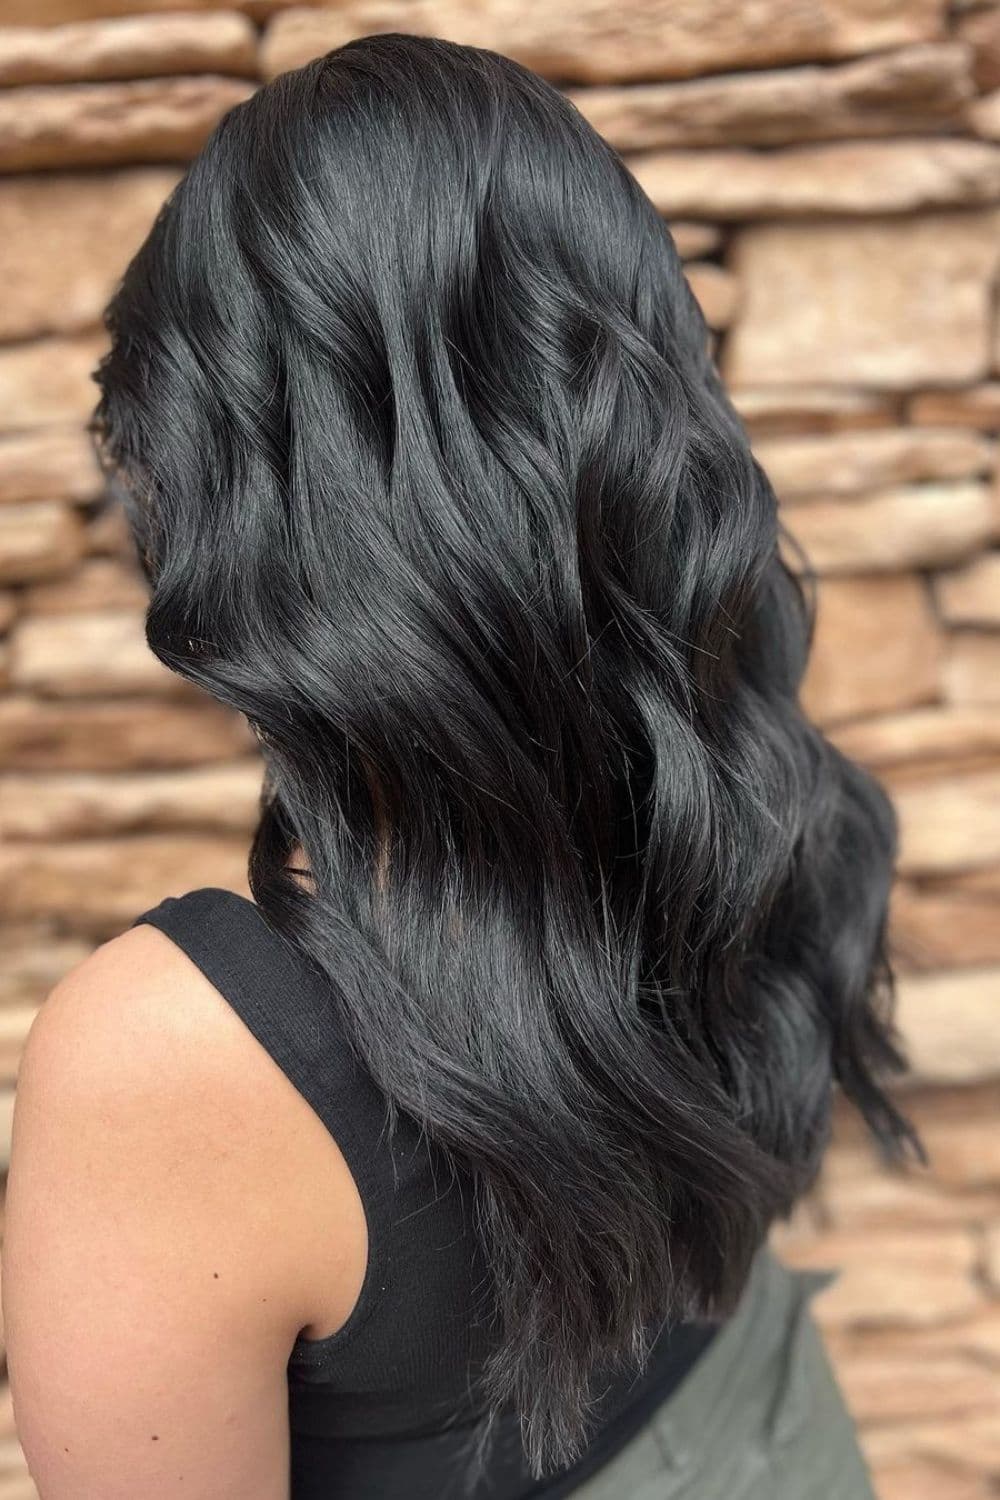 A woman with long deep blue black hair.